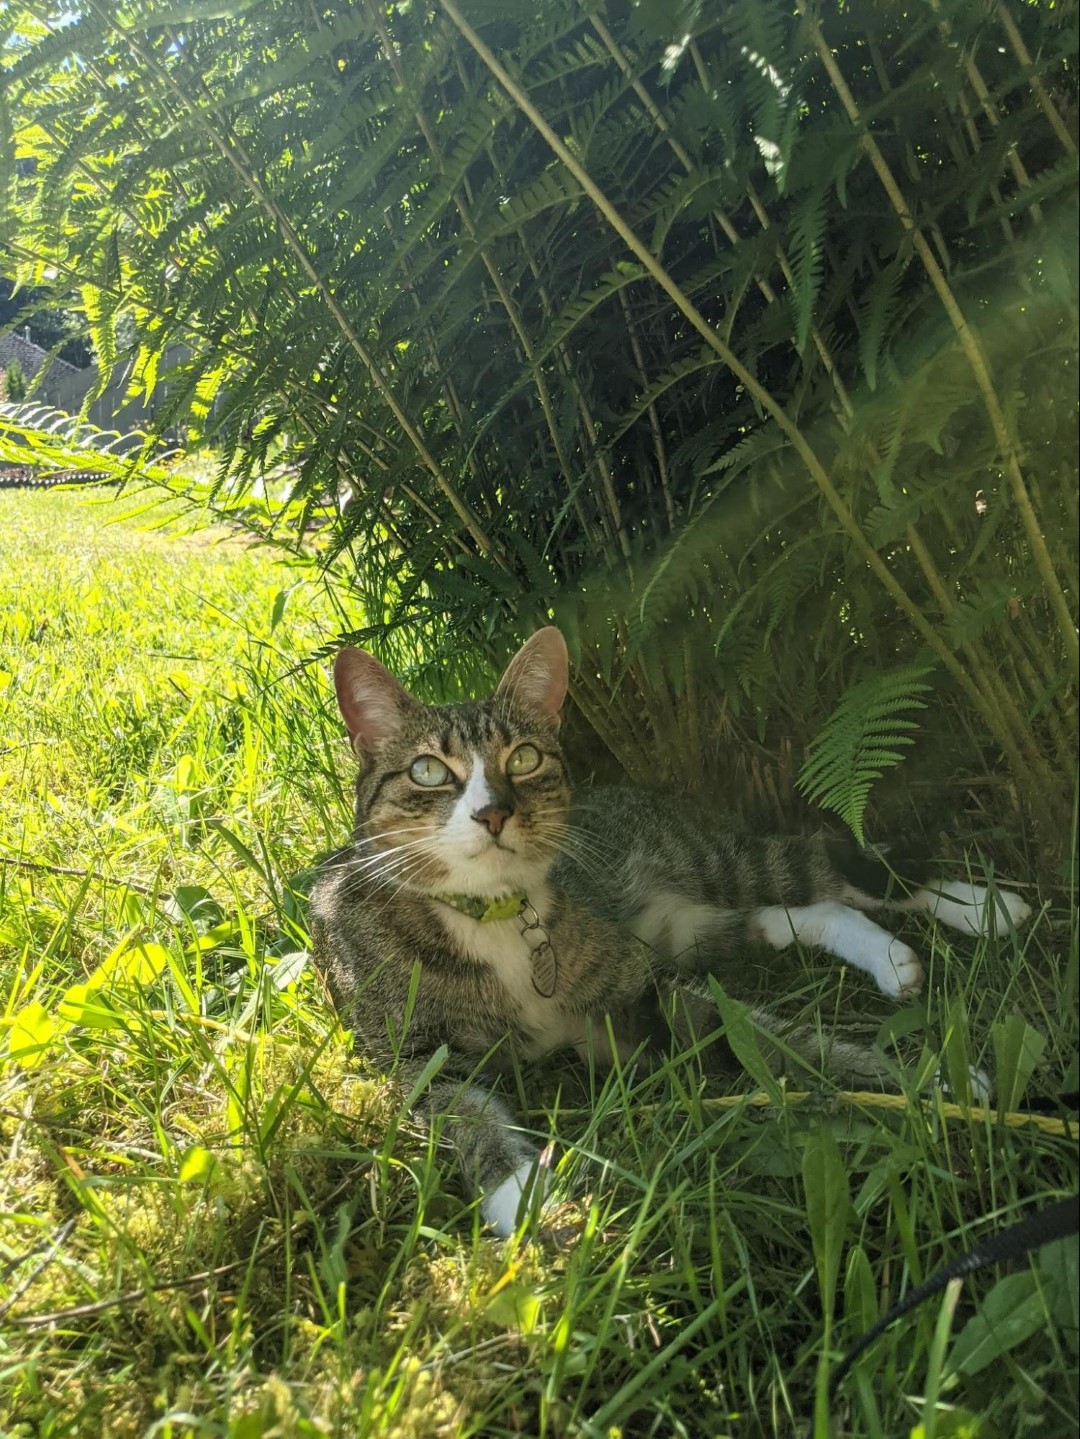 Benny enjoying the shade in his backyard. 